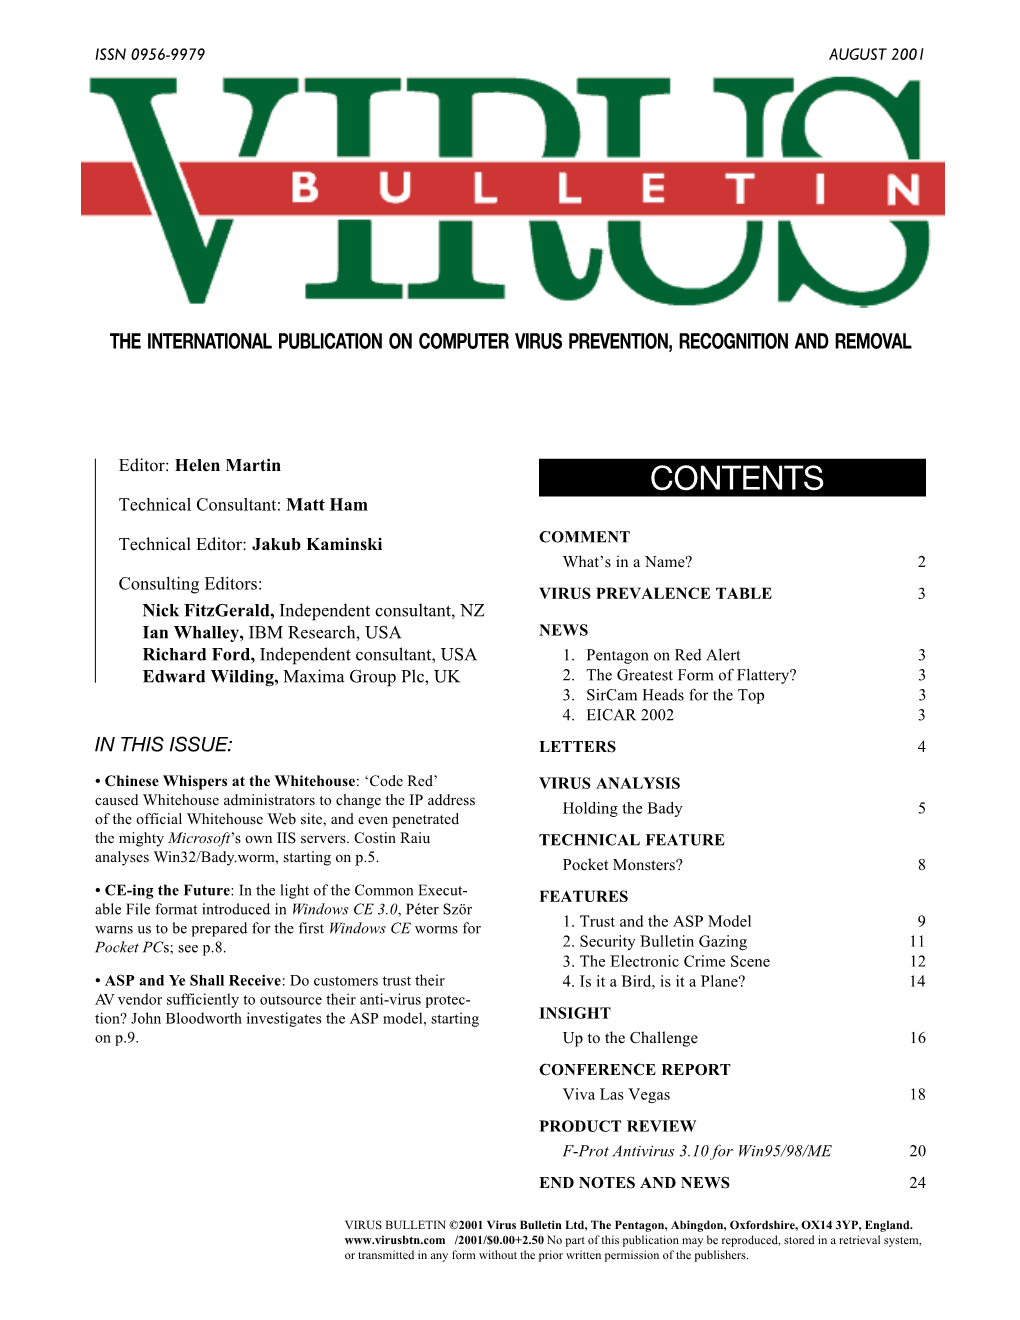 Virus Bulletin, August 2001